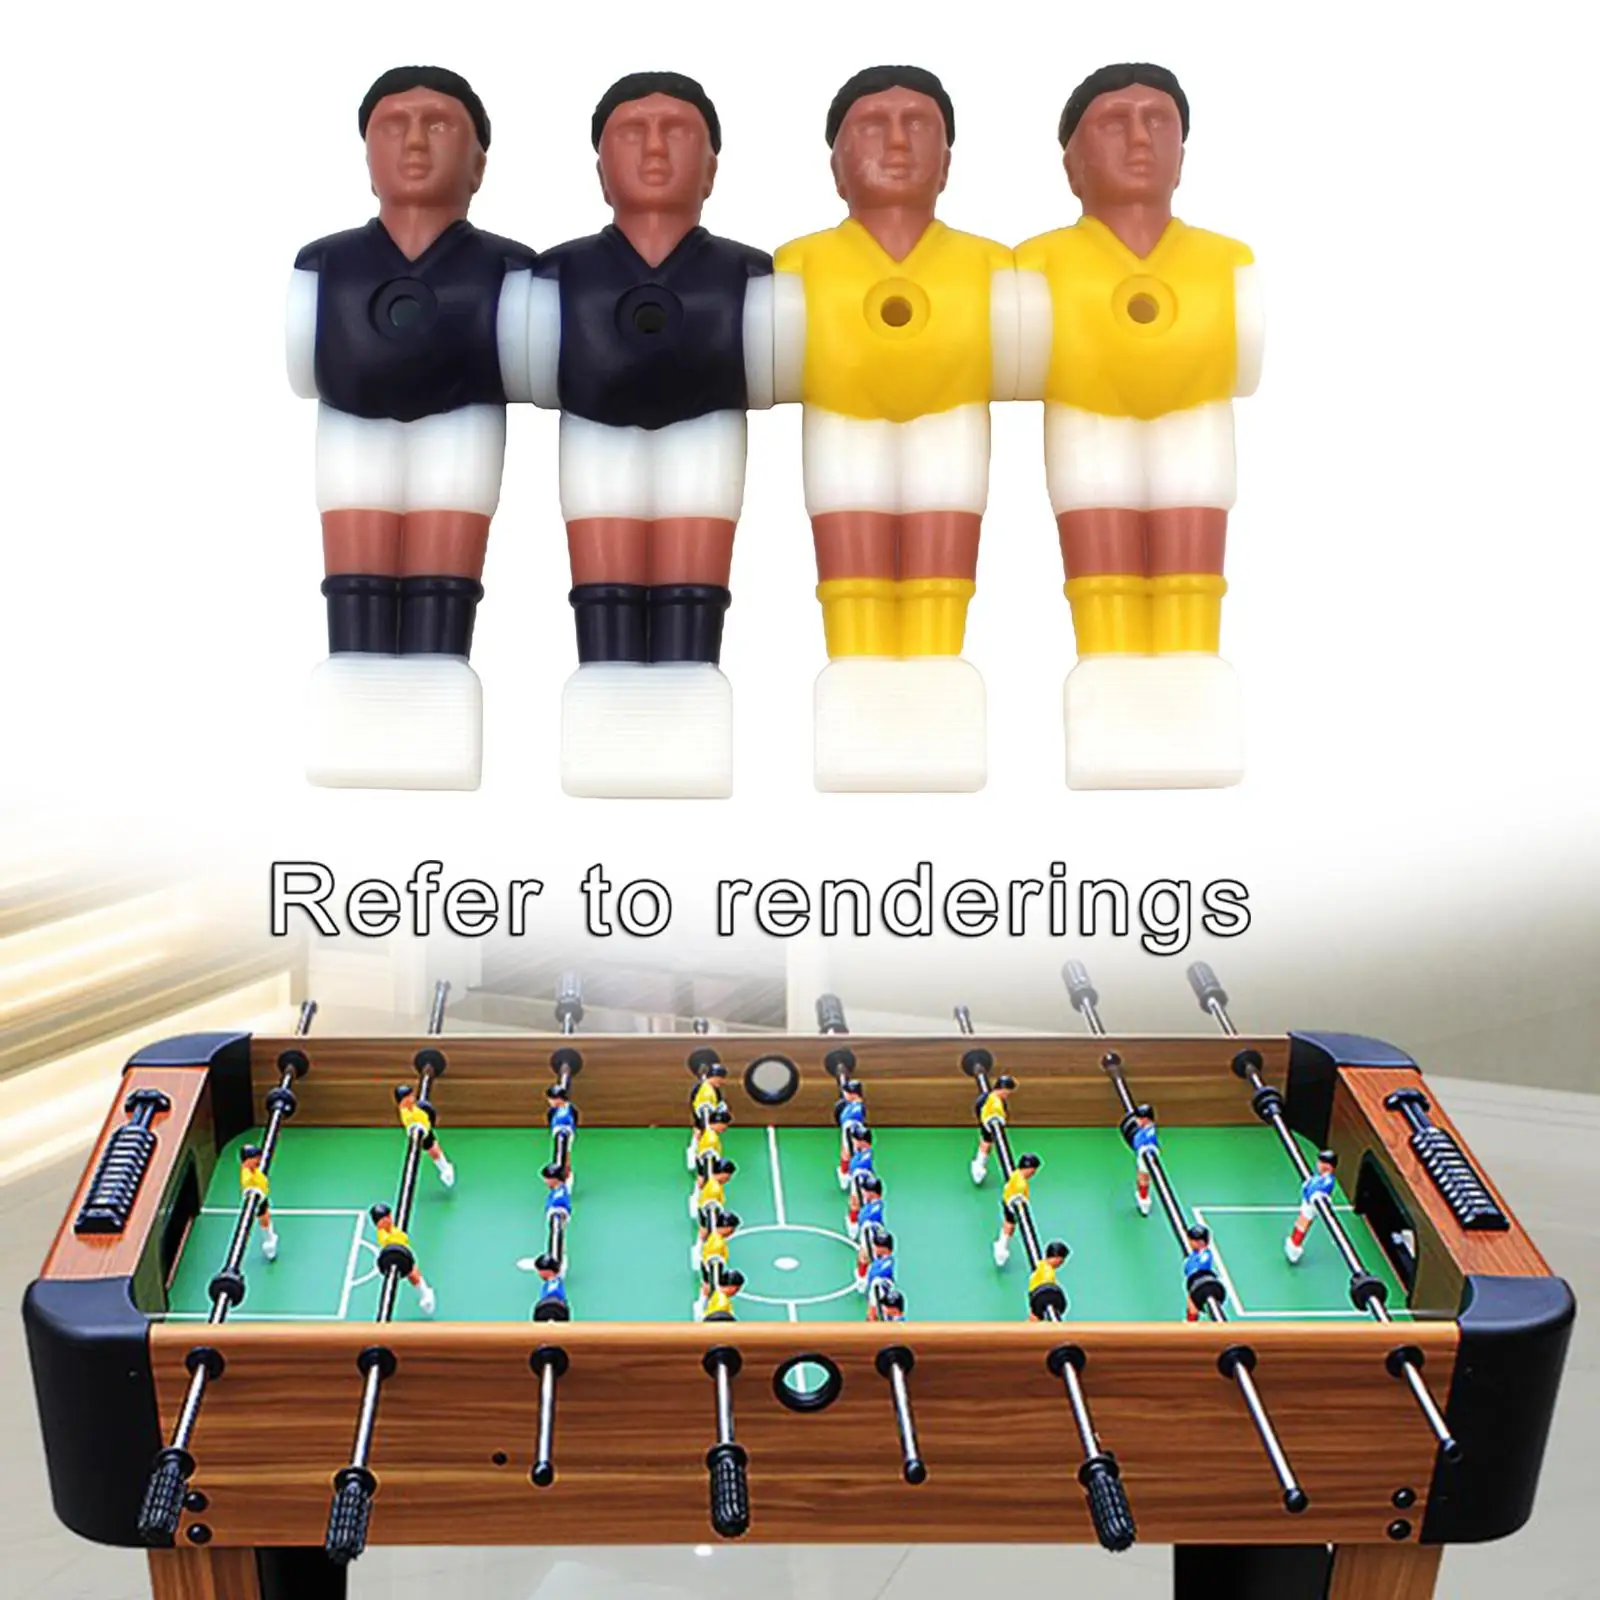 4 pieces kicker men men soccer player tournament replacement accessories